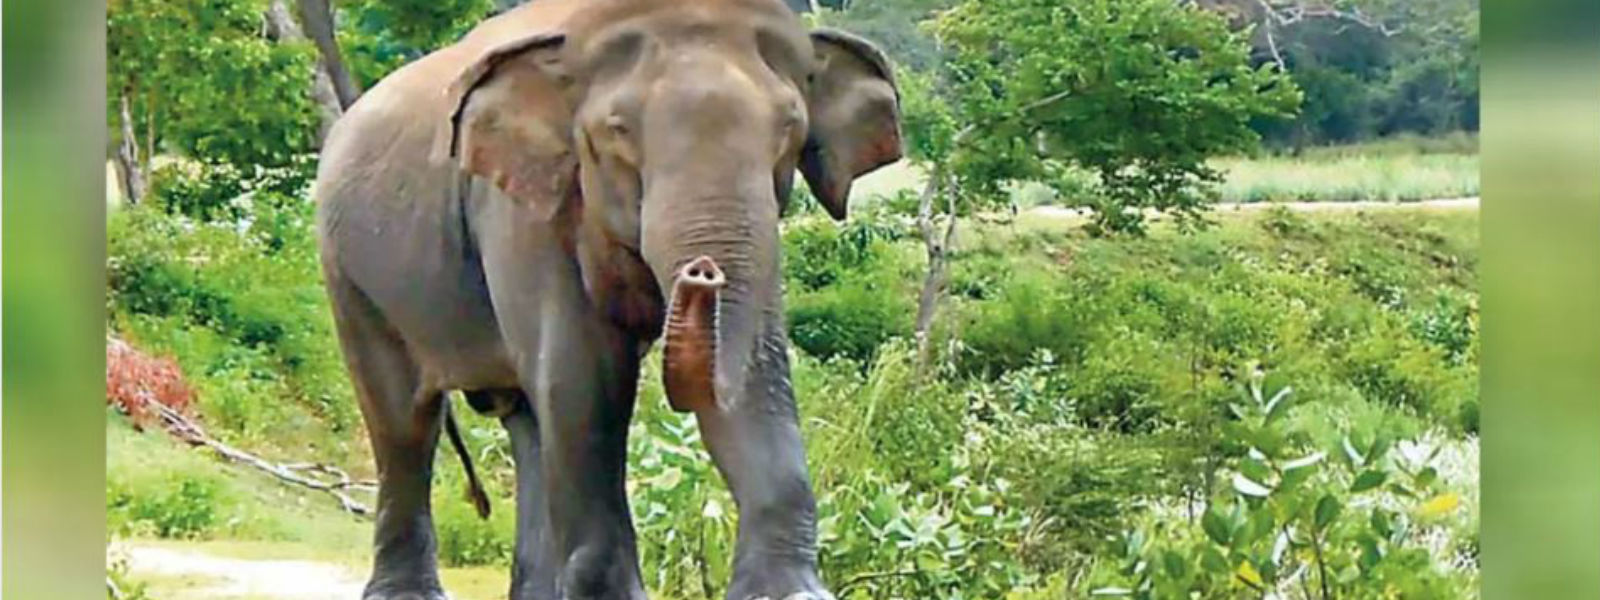 Authorities unable to solve elephant invasions